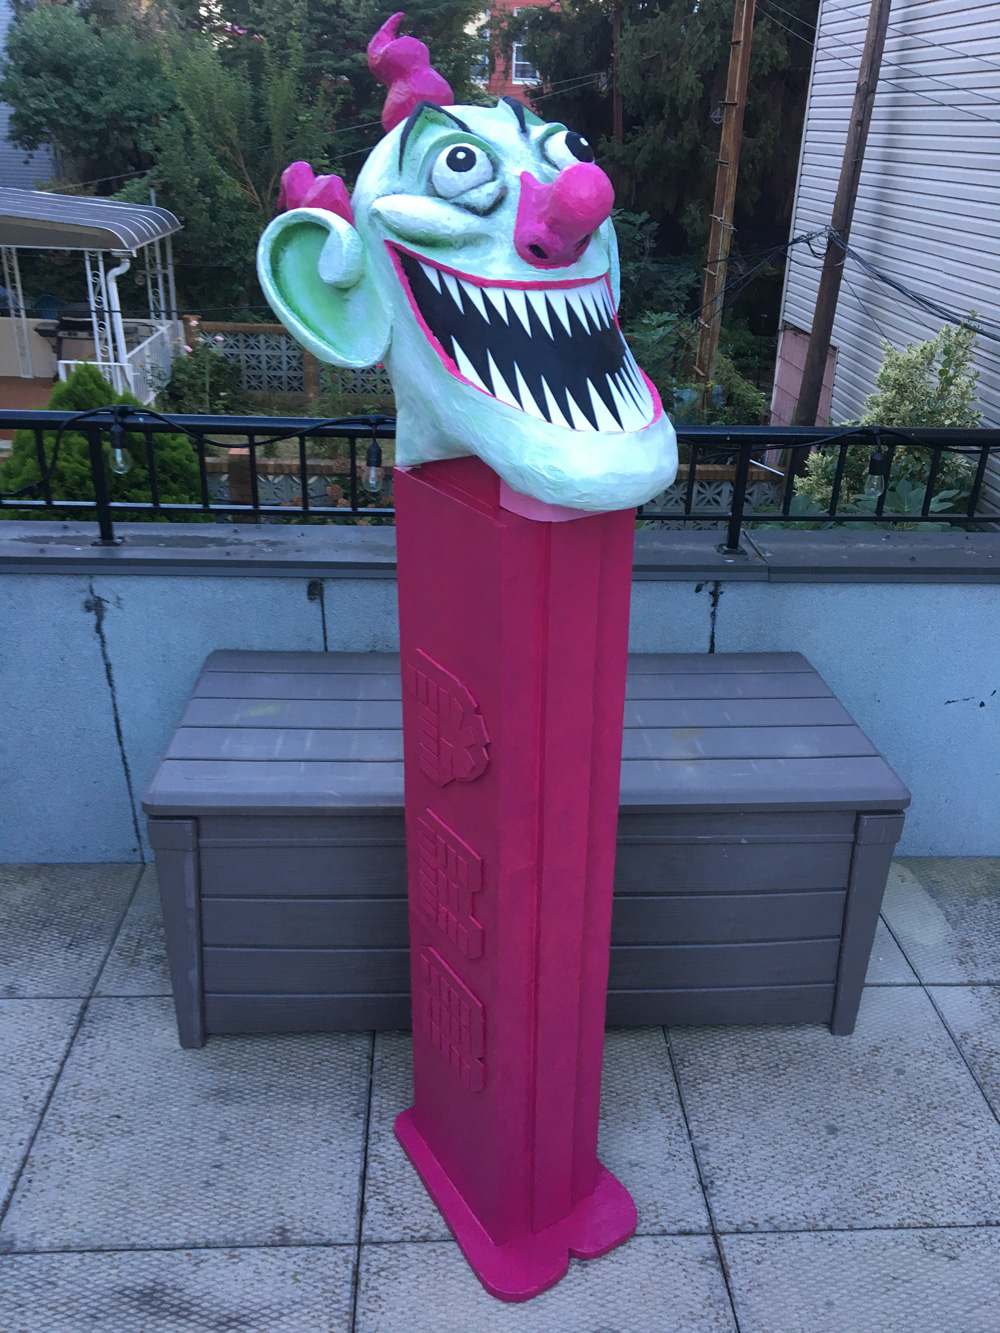 Giant evil clown Pez dispenser - finished!!!